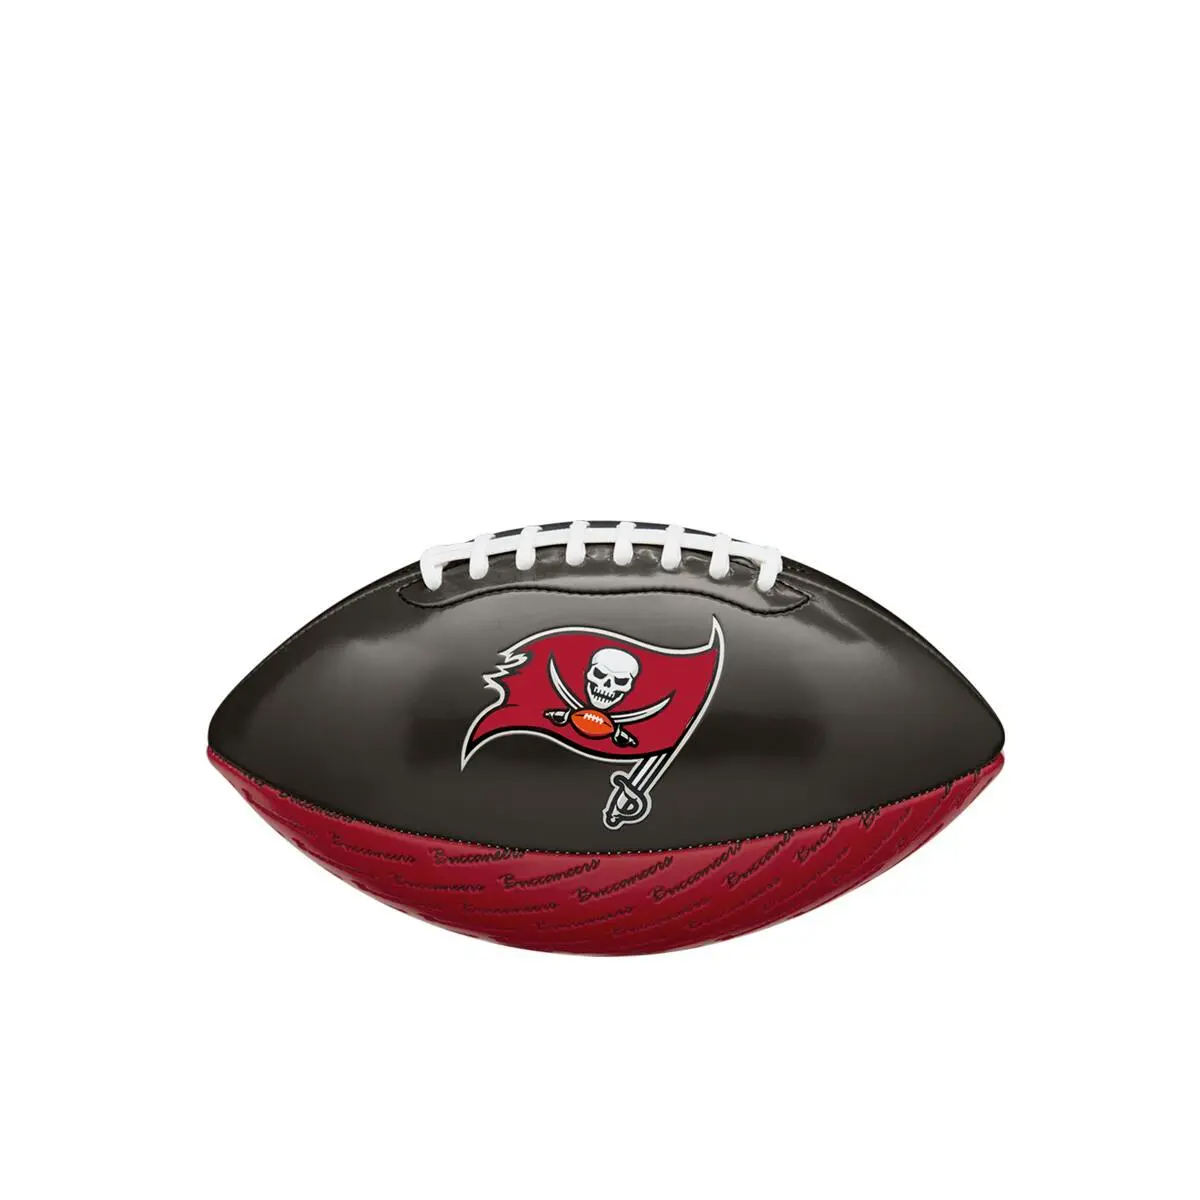 Mini ballon de Football Americain Wilson NFL Team Peewee des Tampa Bay Buccaneers